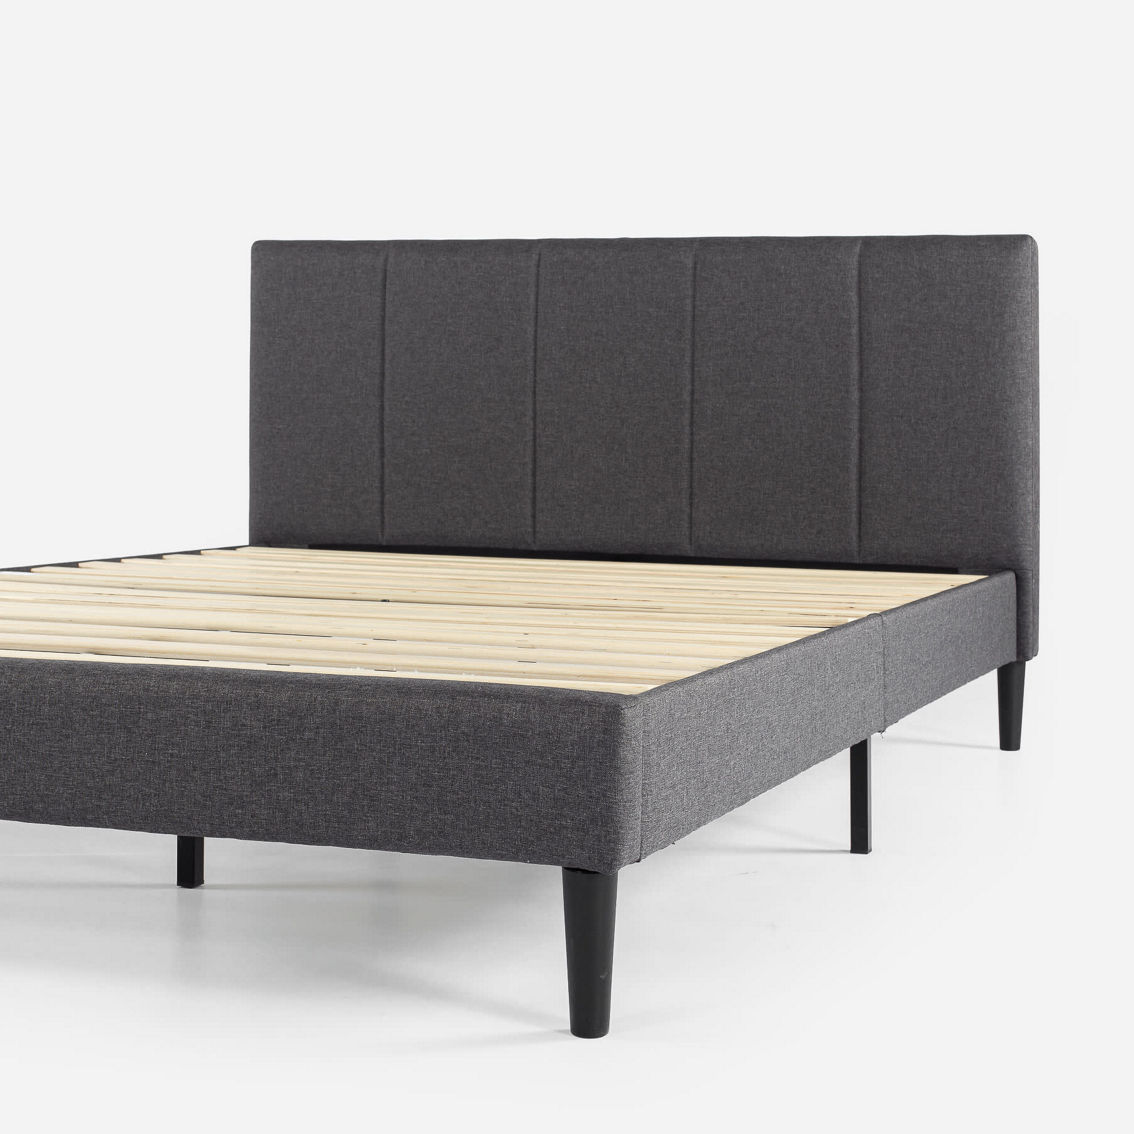 Zinus Upholstered Platform Bed with Short Headboard, Grey - Image 3 of 4